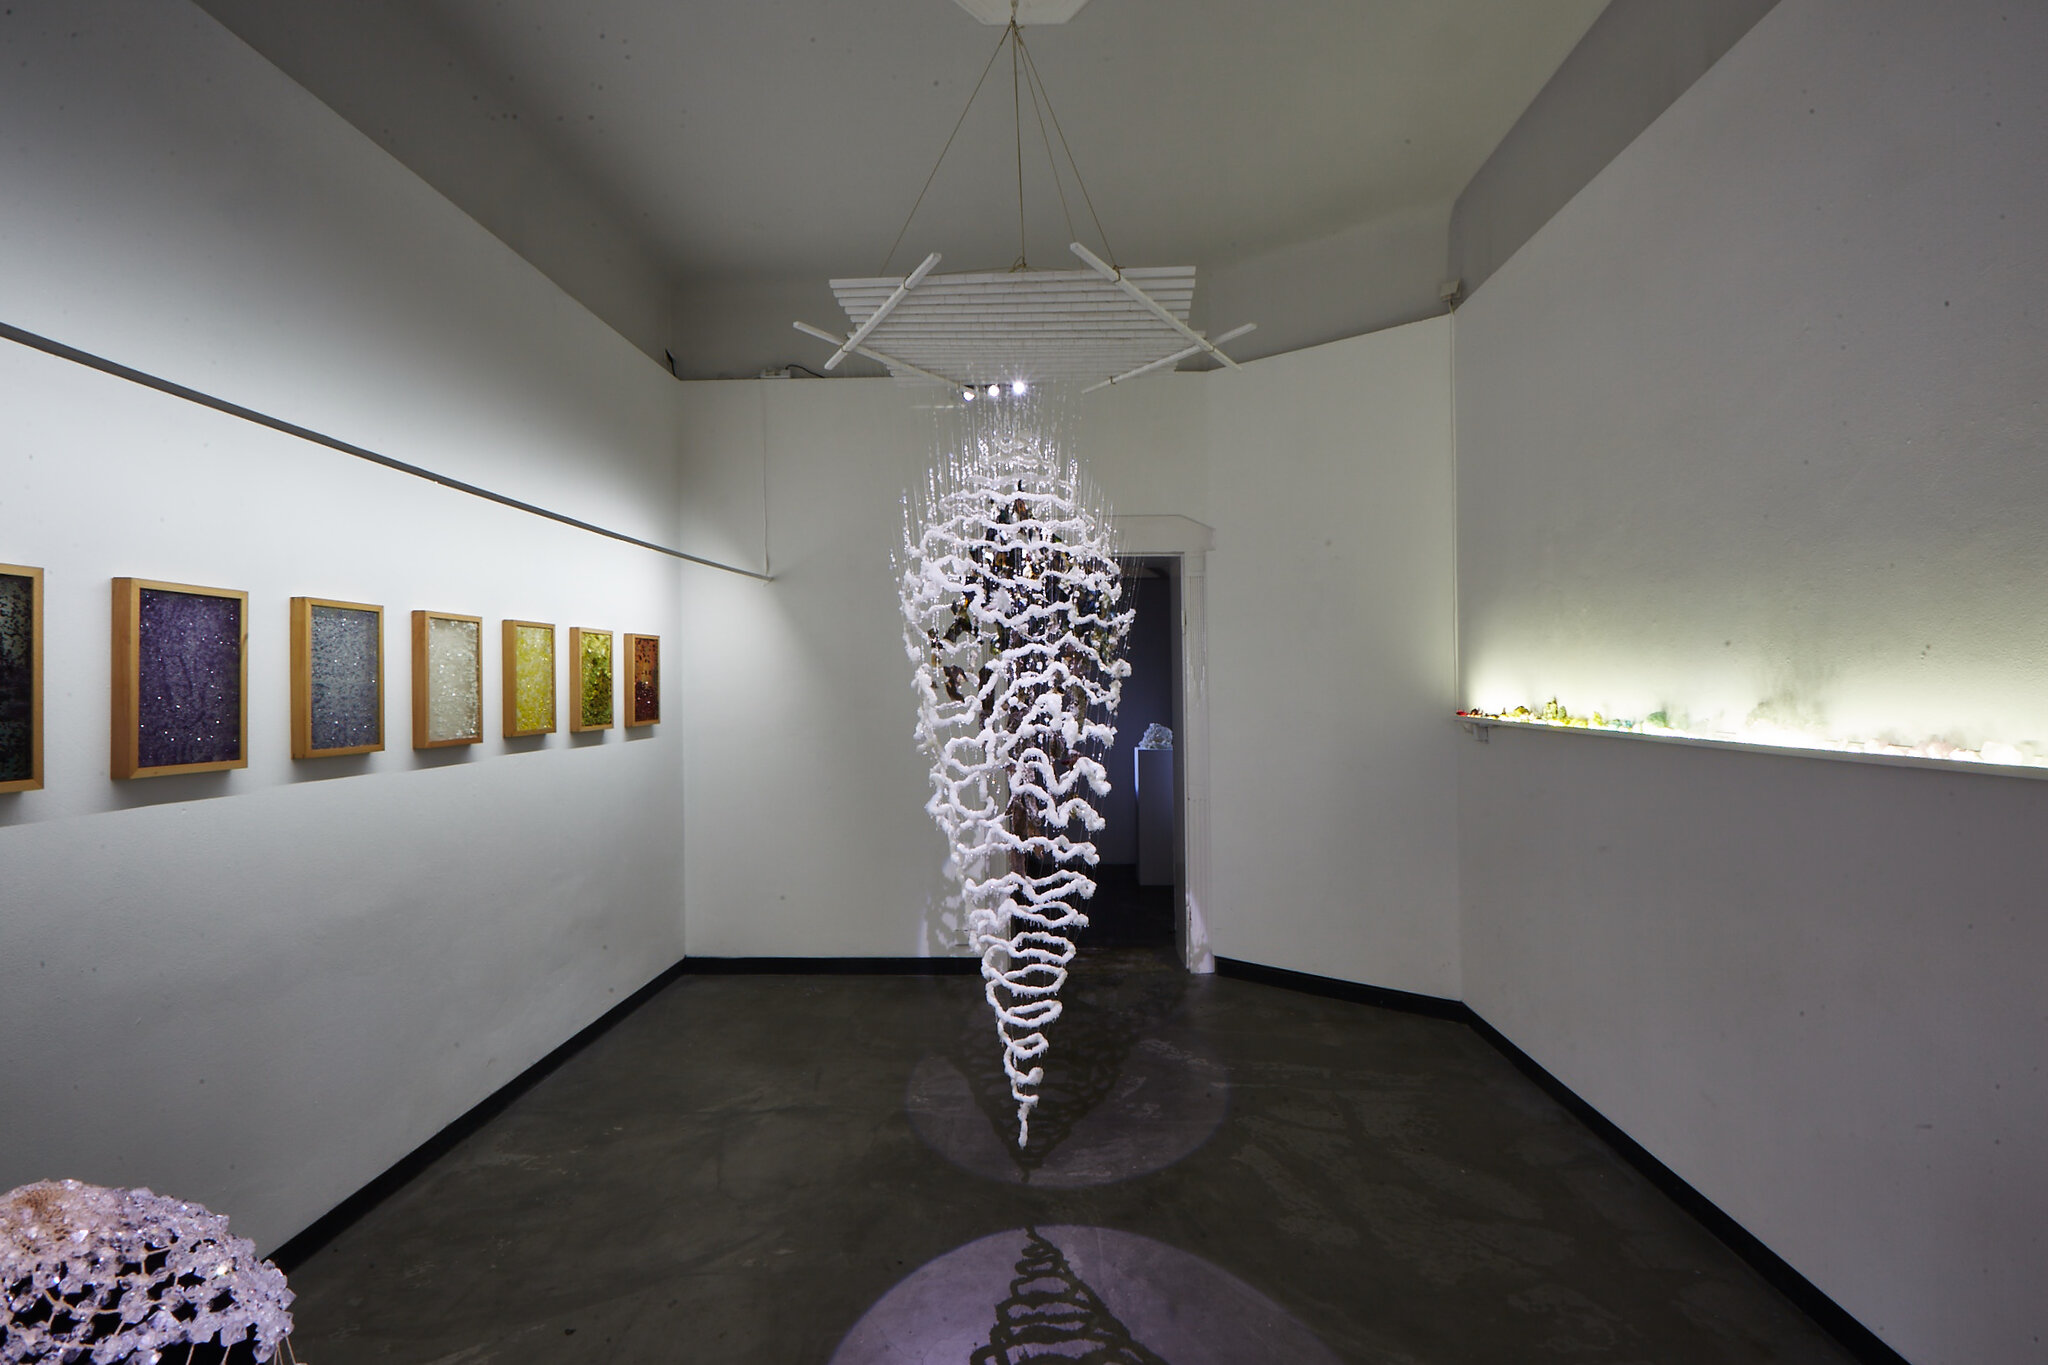 Luz Peuscovich, Installation views from "Chrysalis", 2021